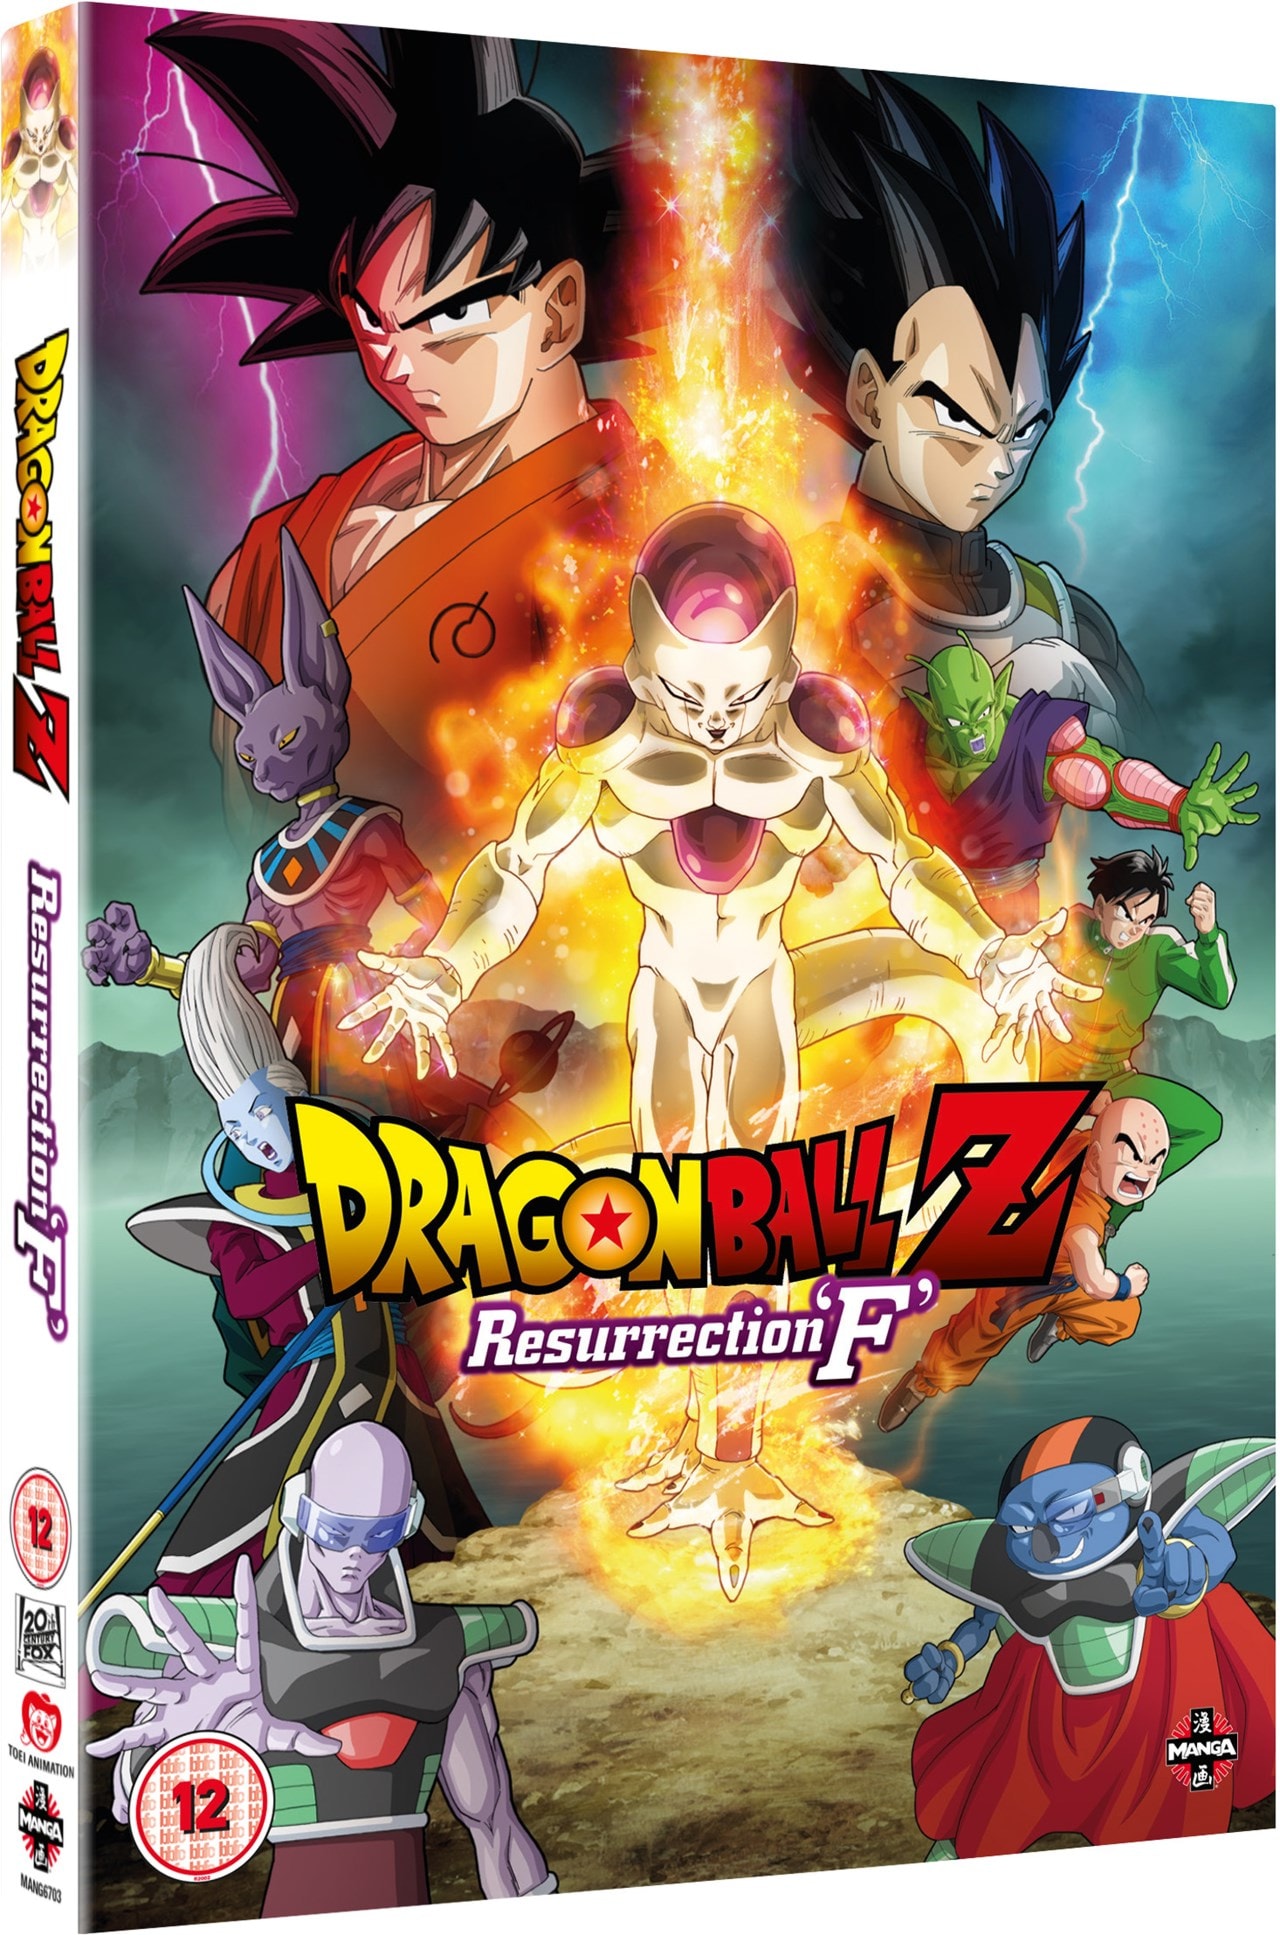 Dragon Ball Z: Resurrection 'F' | DVD | Free shipping over £20 | HMV Store